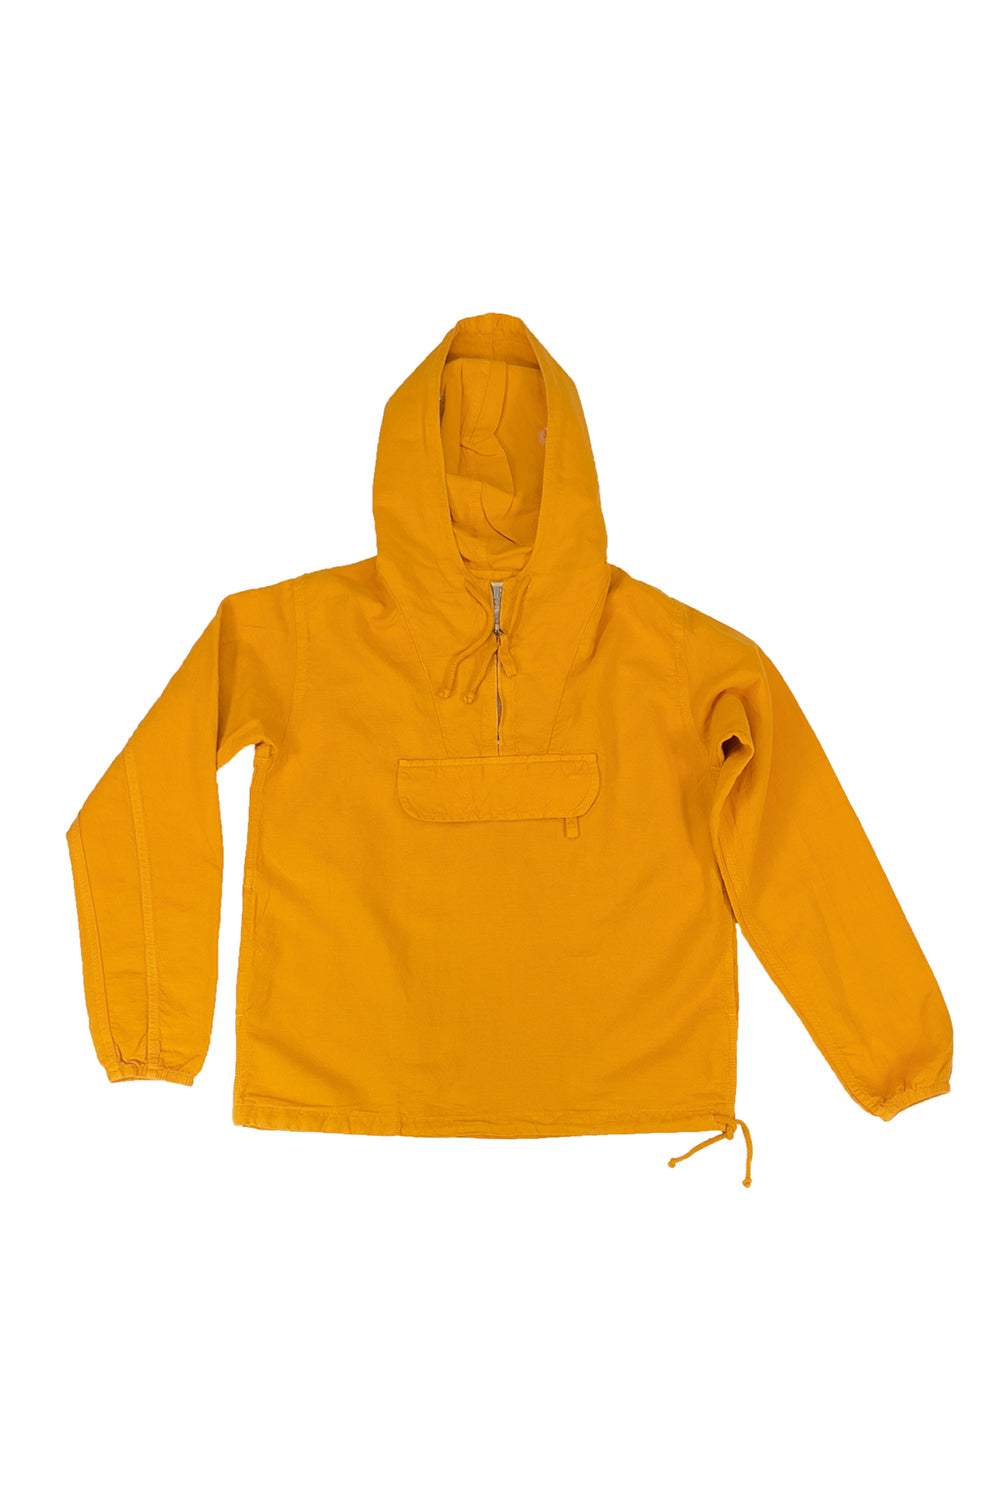 Shoreline Anorak Jacket | Jungmaven Hemp Clothing & Accessories / Color: Mango Mojito